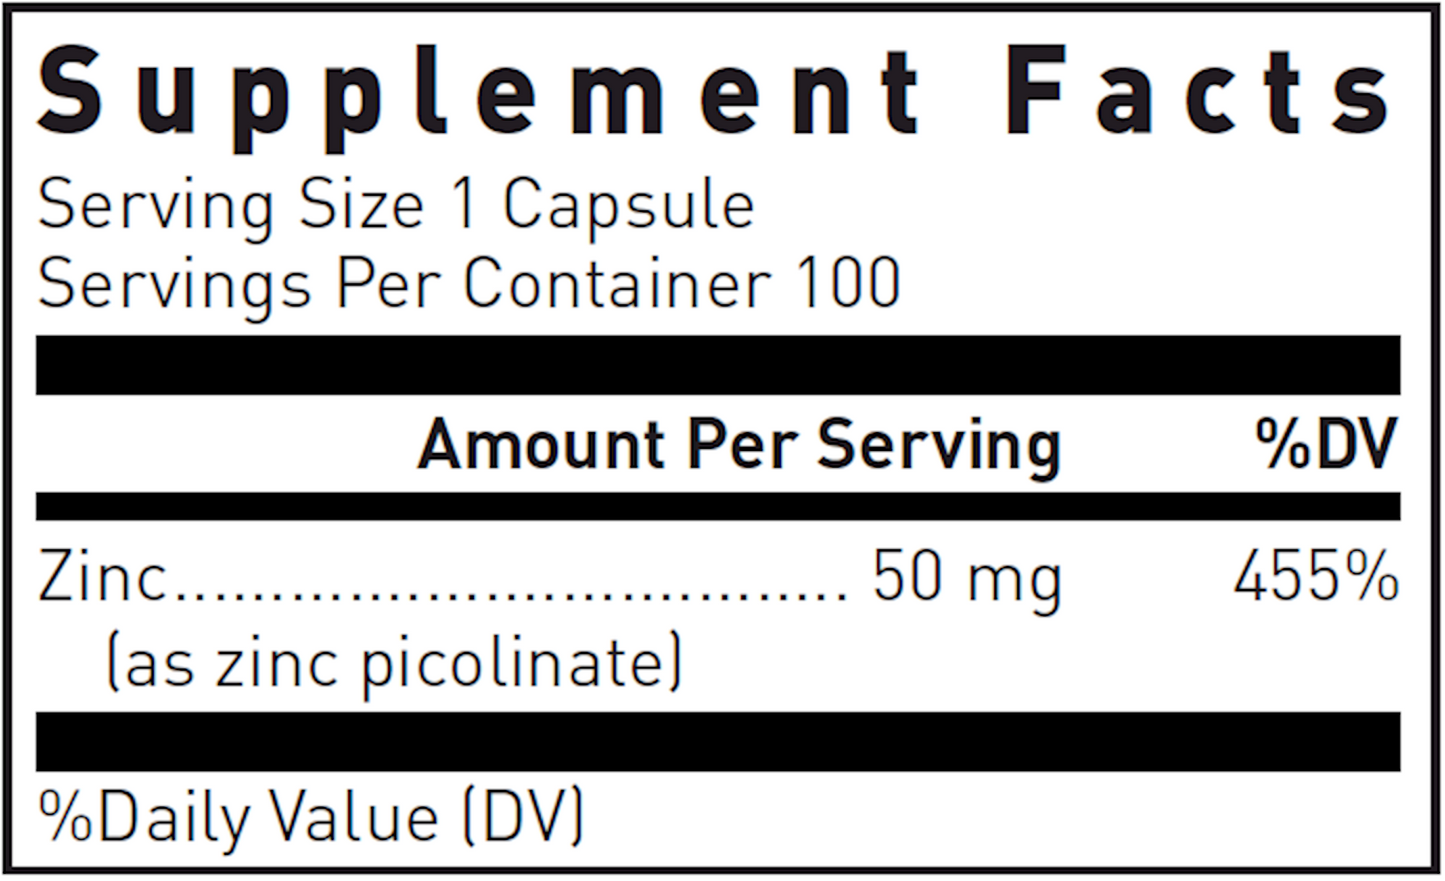 Zinc Picolinate 50 mg